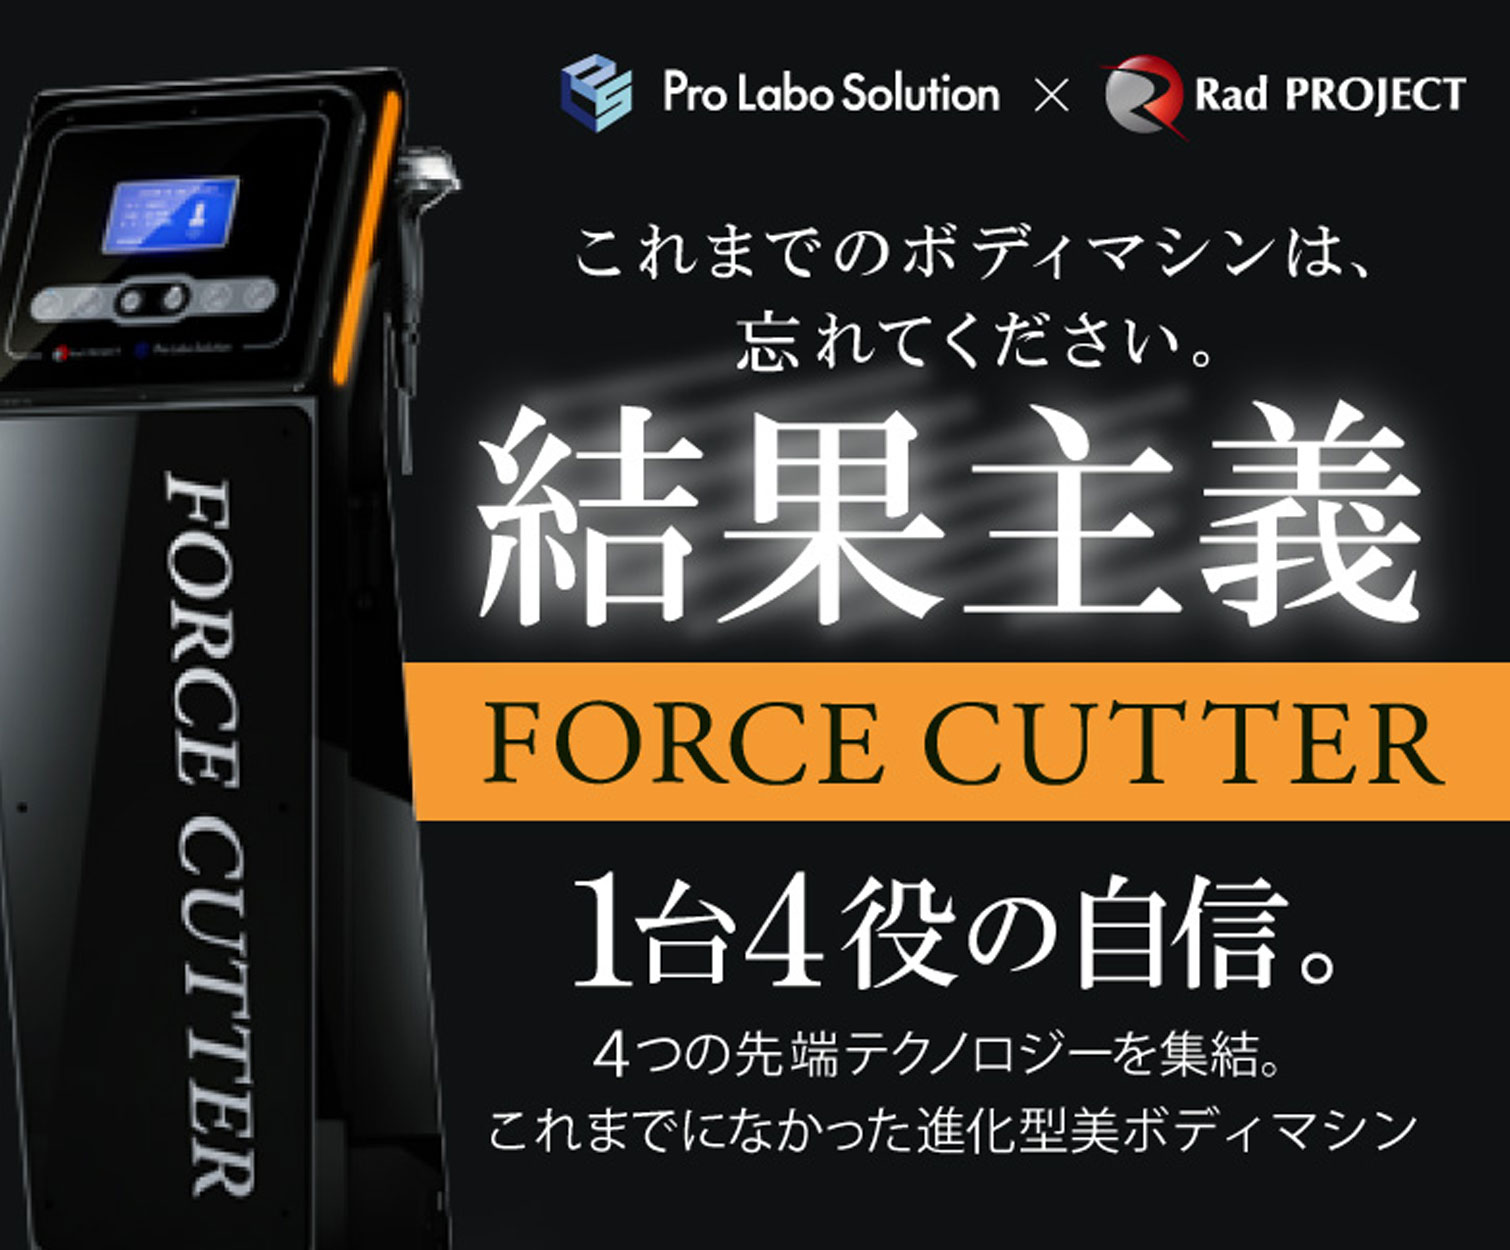 Force Cutter